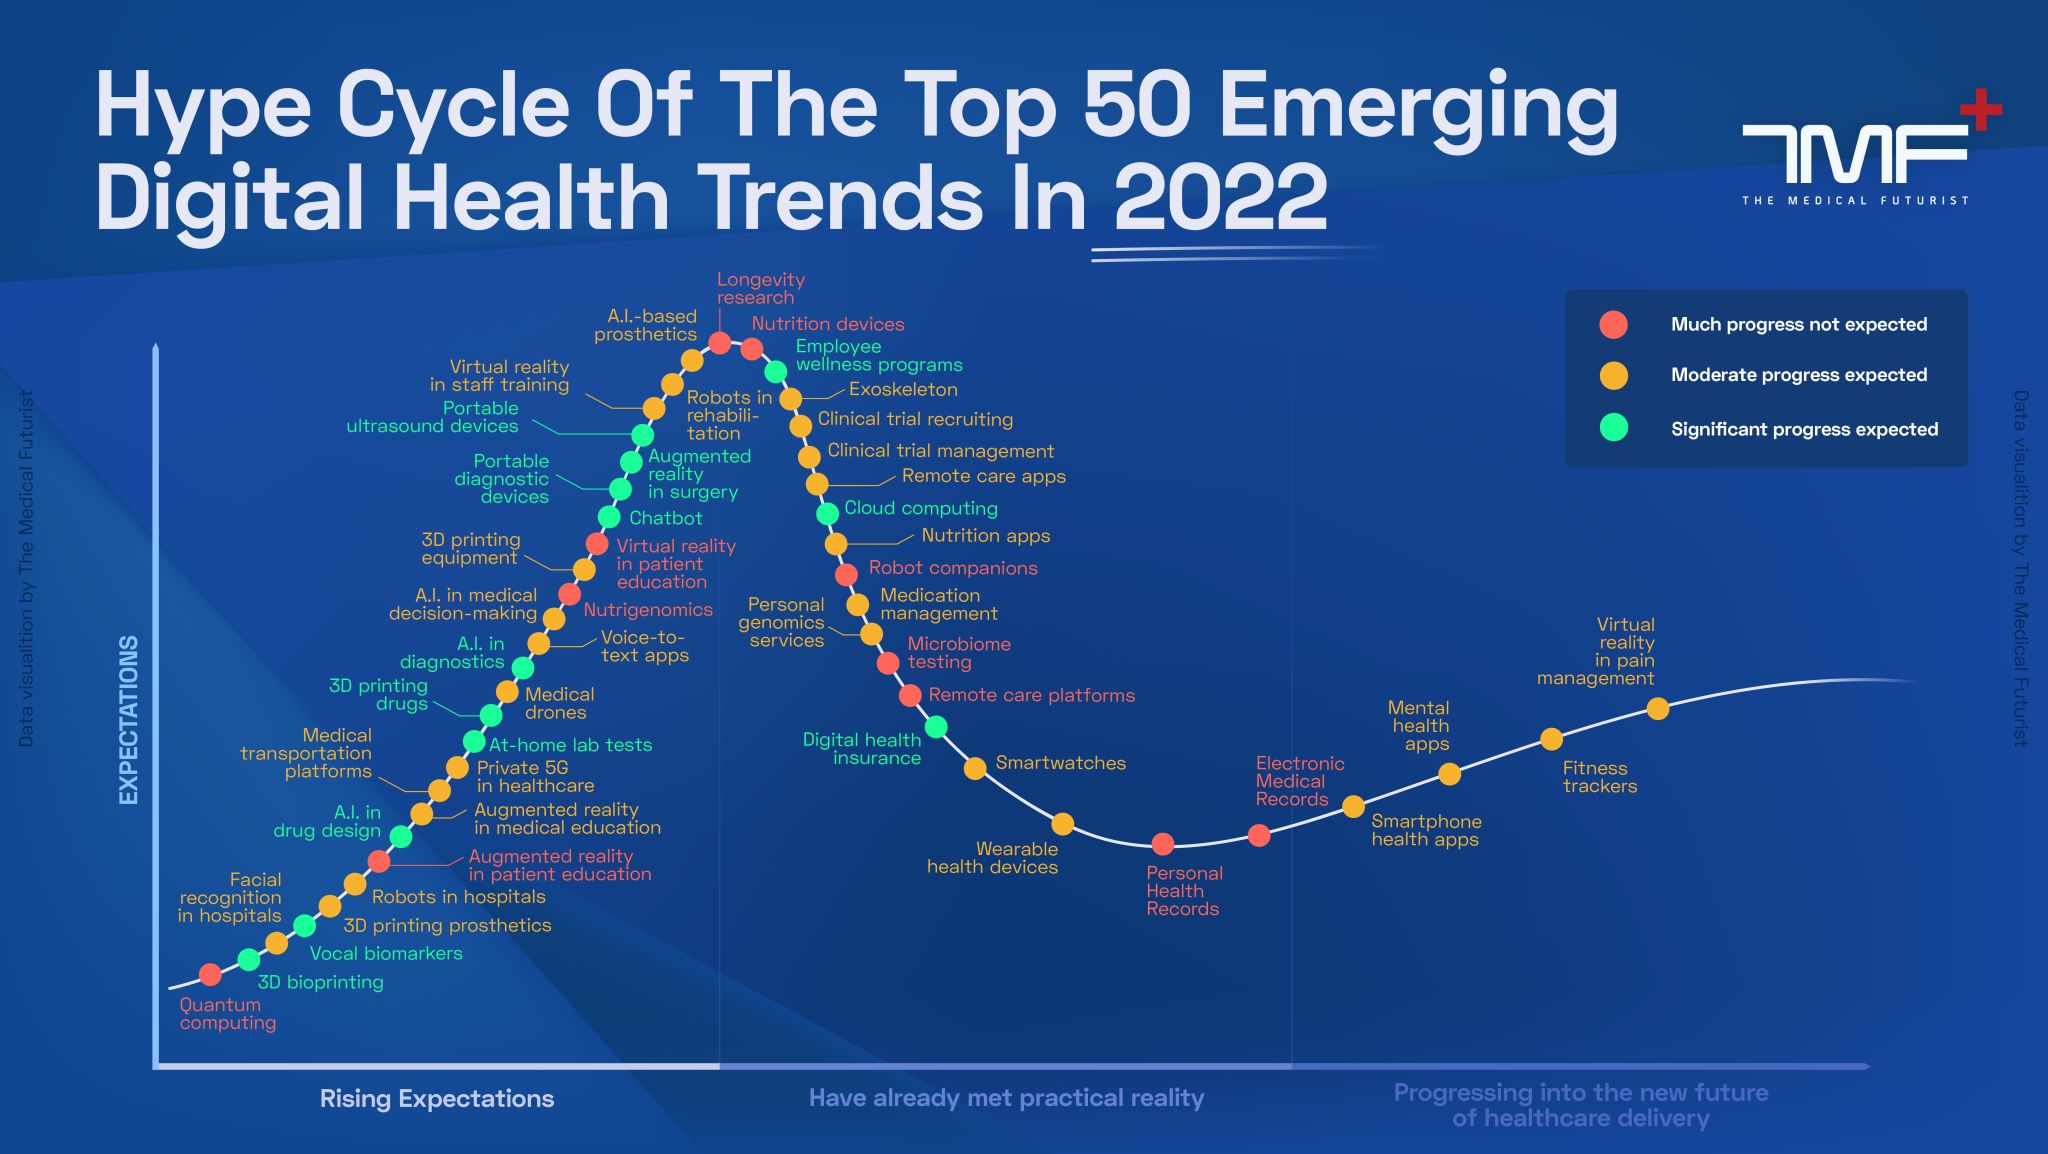 Emerging digital health trends for mental healthcare apps